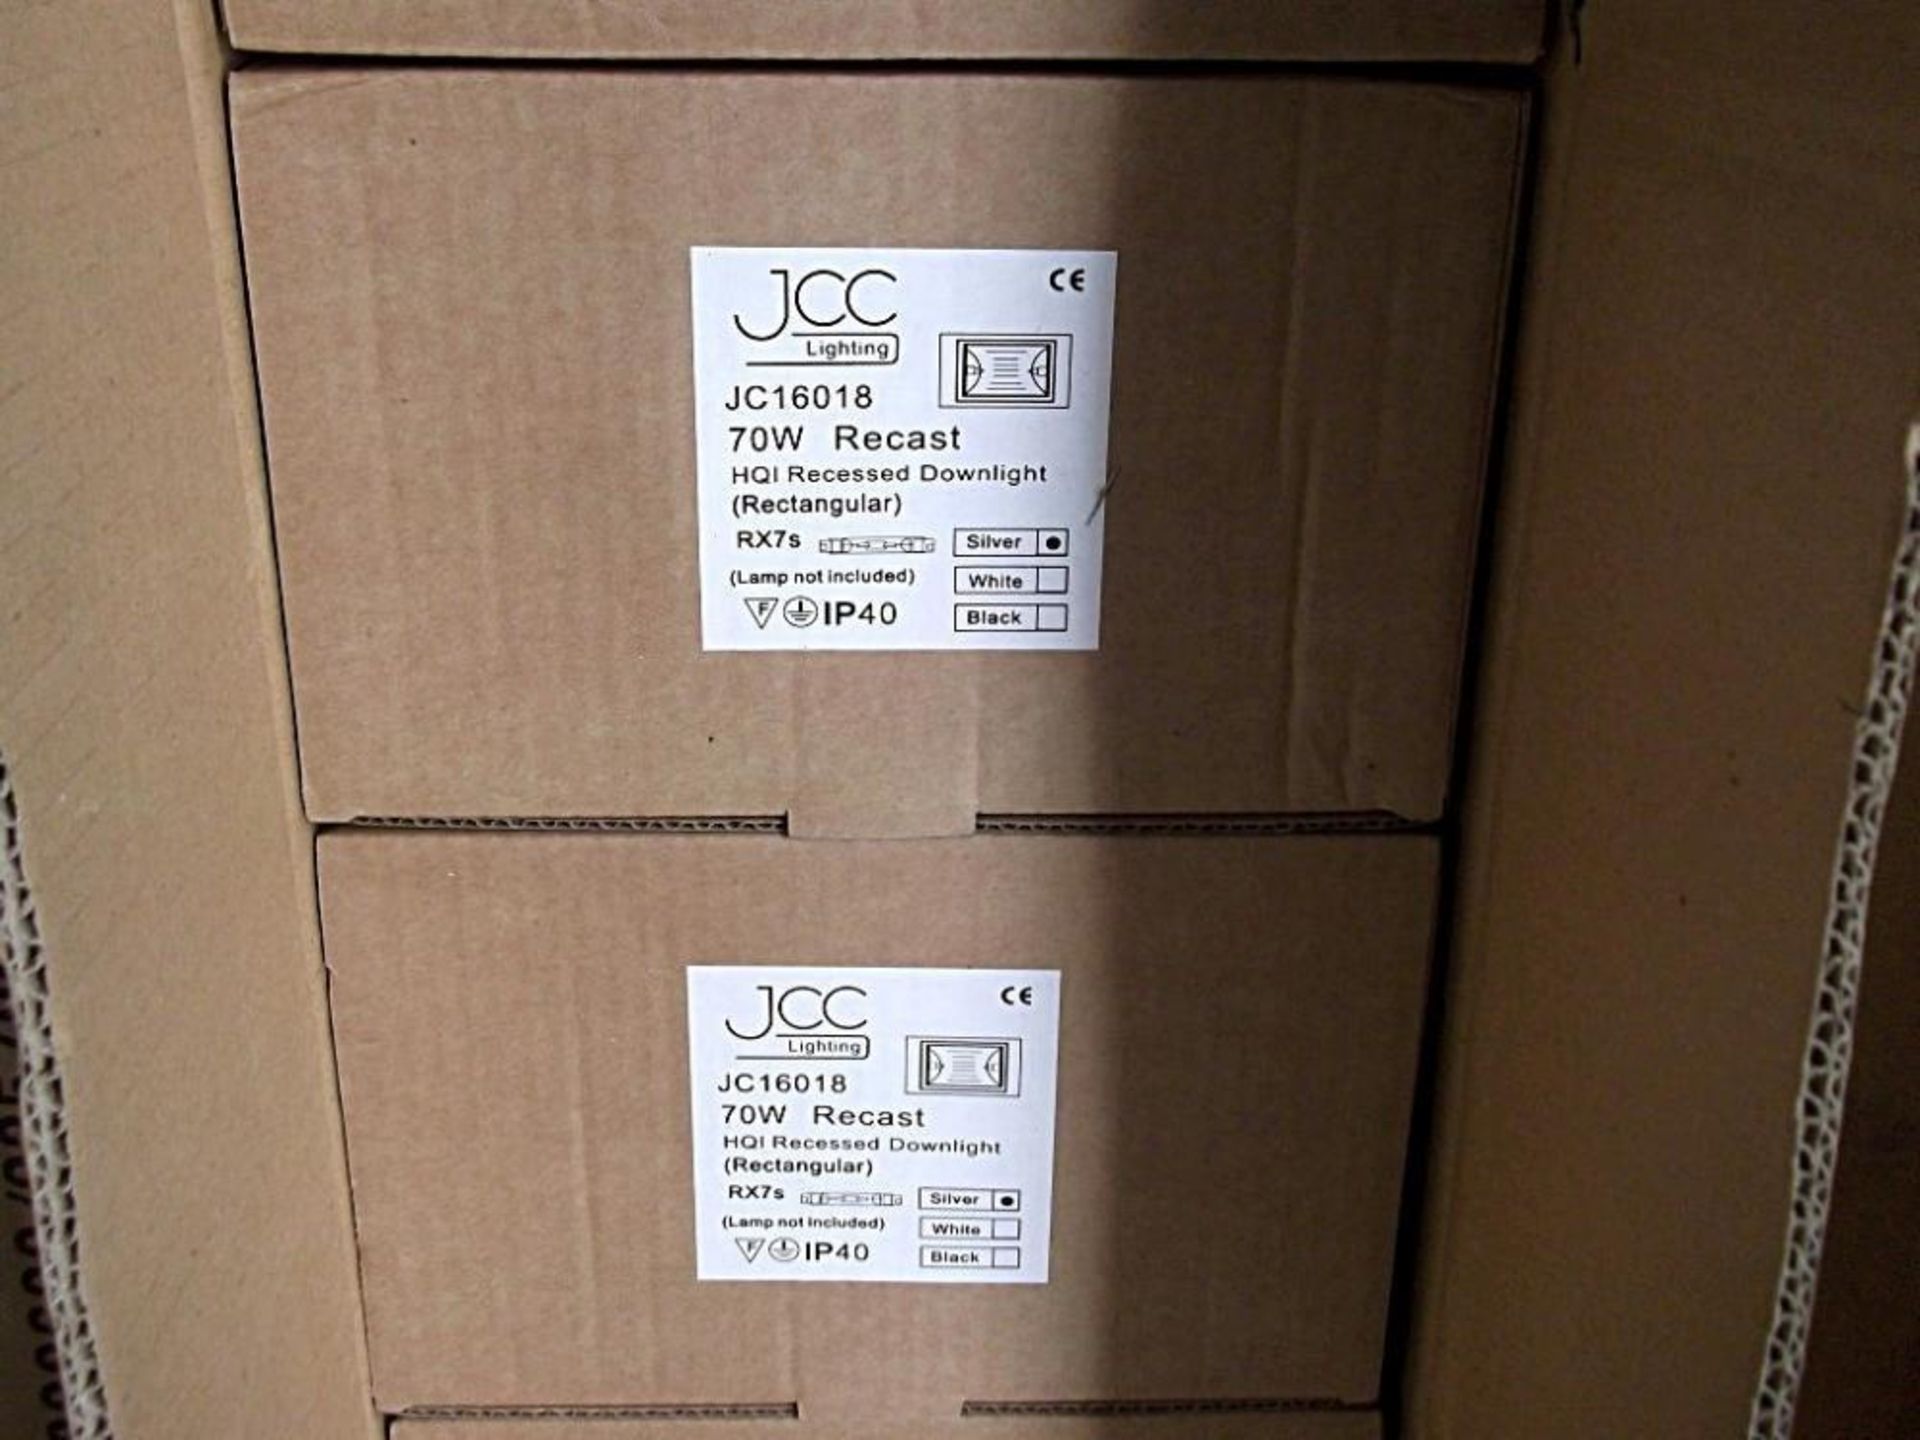 5 x JCC Lighting JC16018 Recast White HQI Recessed Down-lighters - New Boxed Stock - Aluminium Casin - Image 2 of 5